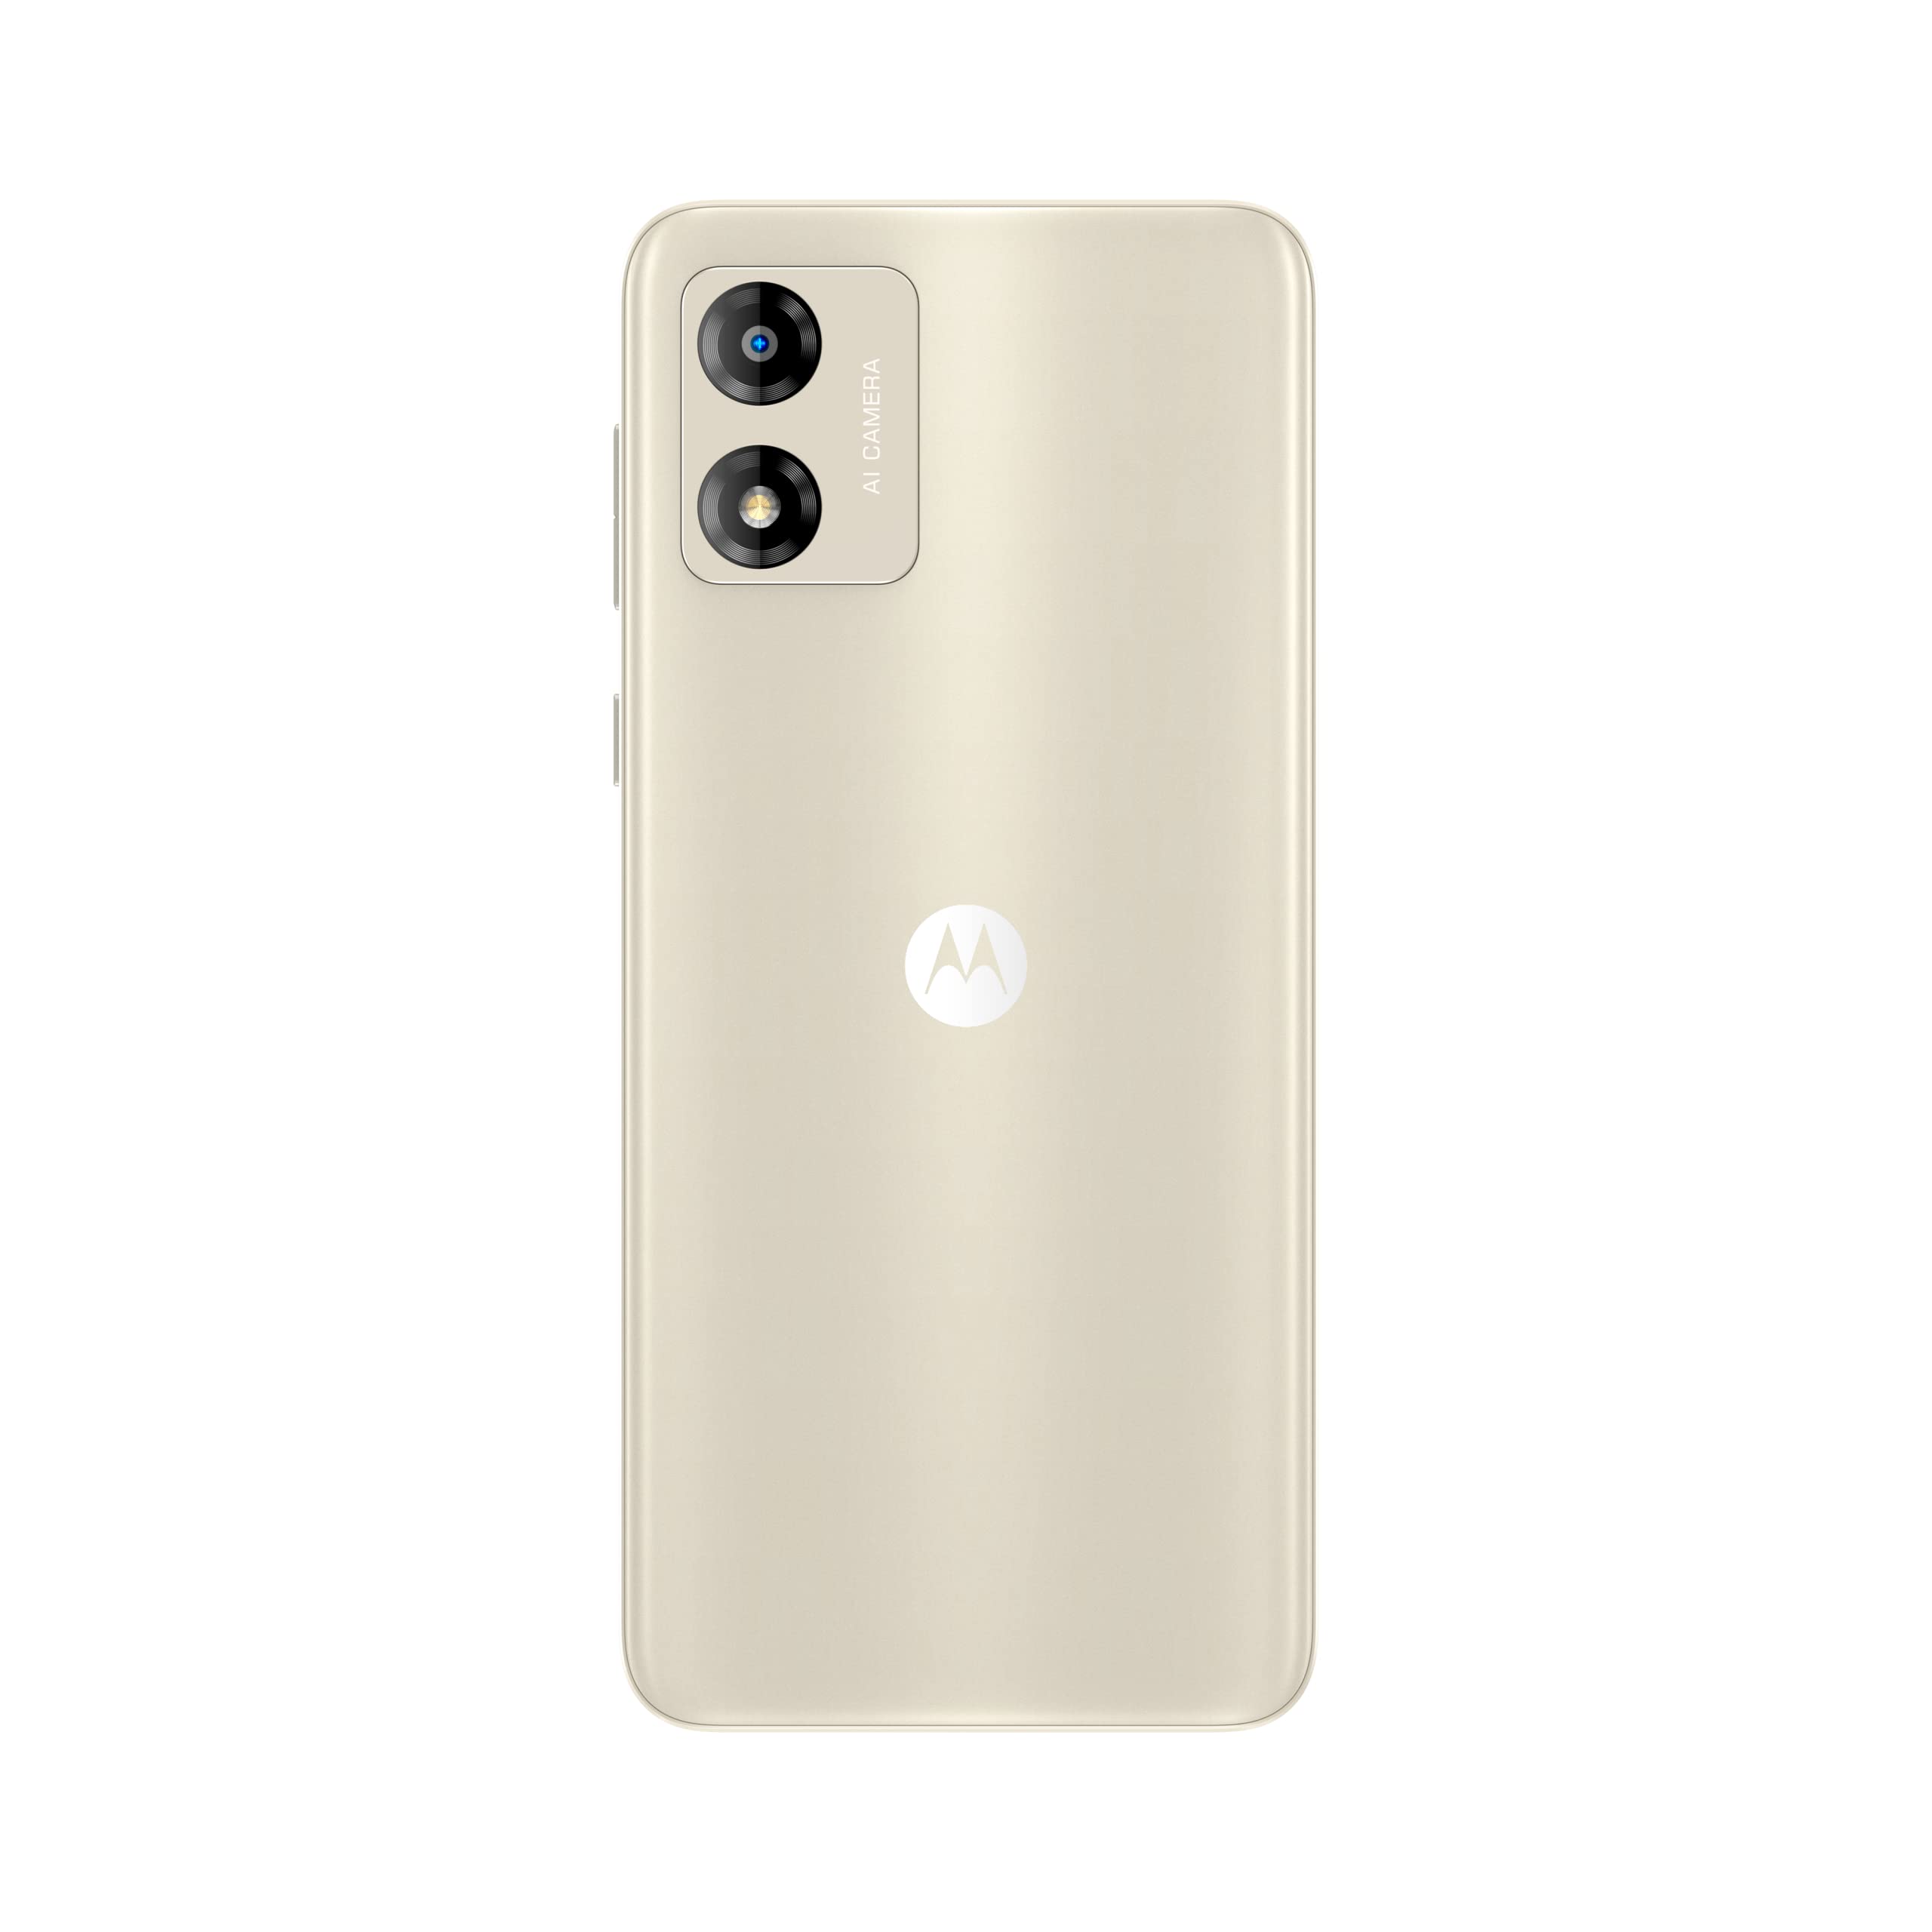 Motorola Moto E13 Dual SIM 64GB ROM + 2GB RAM Factory Unlocked 4G Smartphone (Creamy White) - International Version